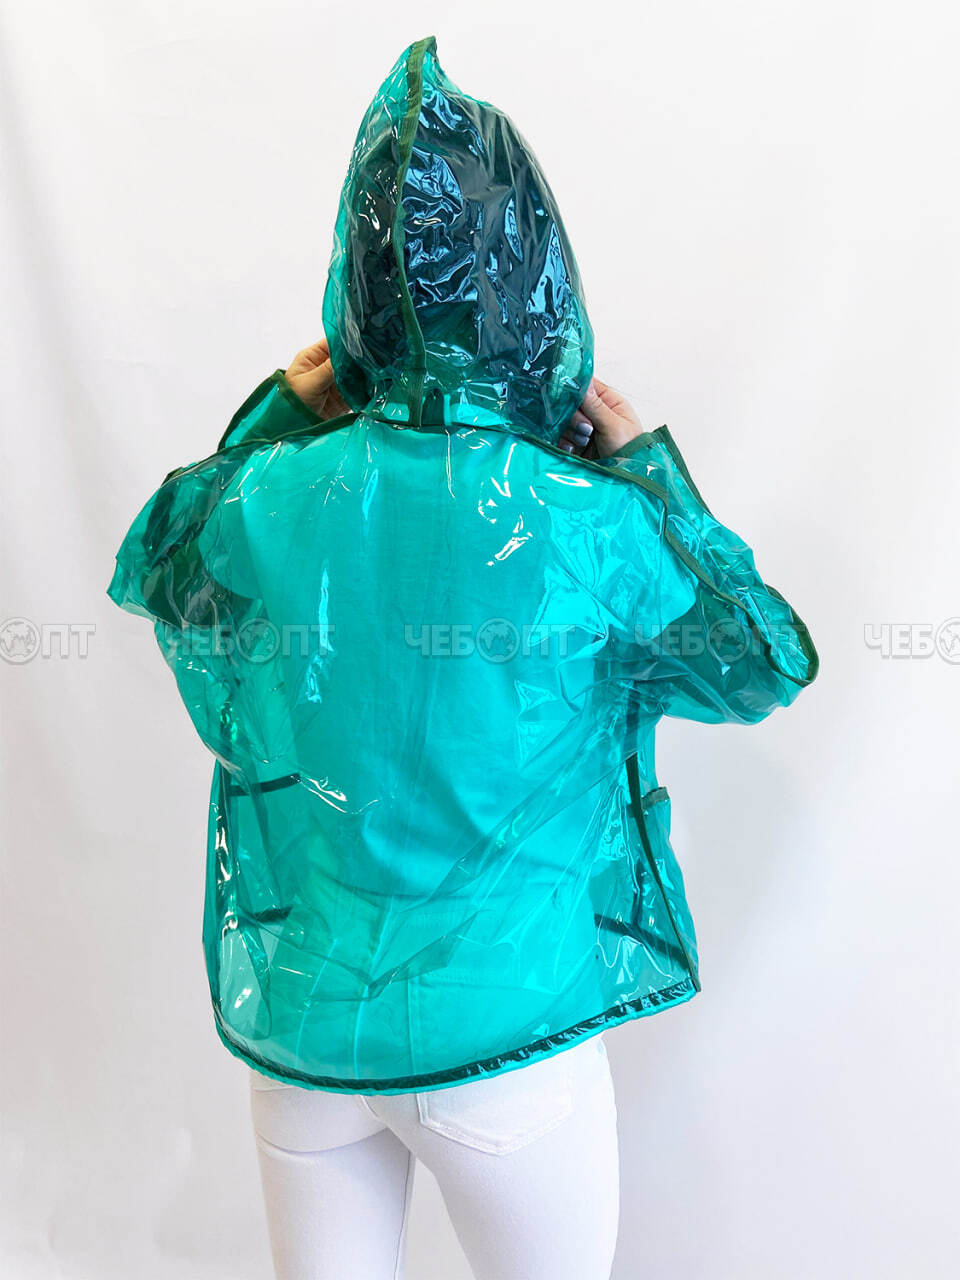 Куртка дождевик на молнии,ЧЕБПРО,цветная пленка, размер 46-50,100% пленка ПВХ, Арт.КурПЛЕНКА/зеленый, МПС [15] СобПр. ЧЕБОПТ.